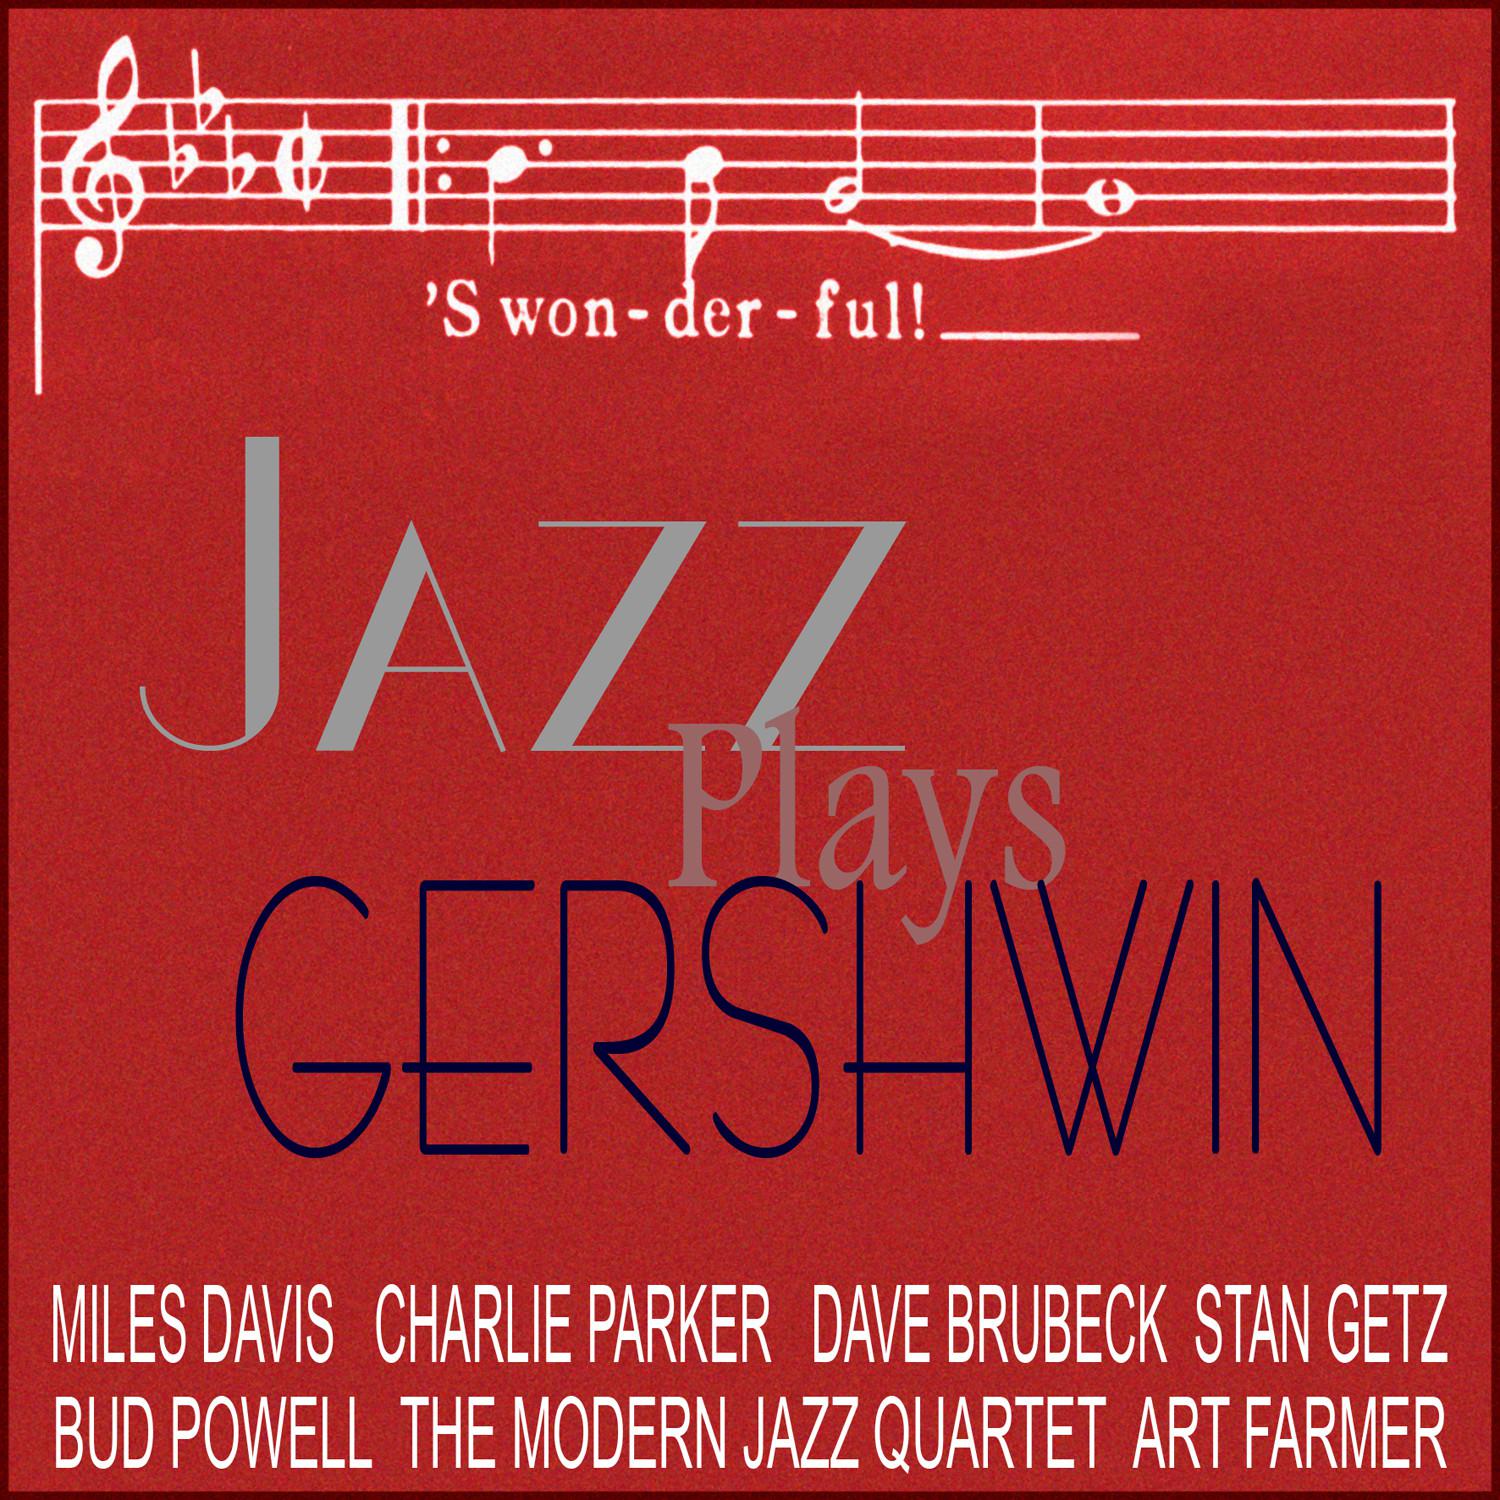 Jazz Plays Gershwin